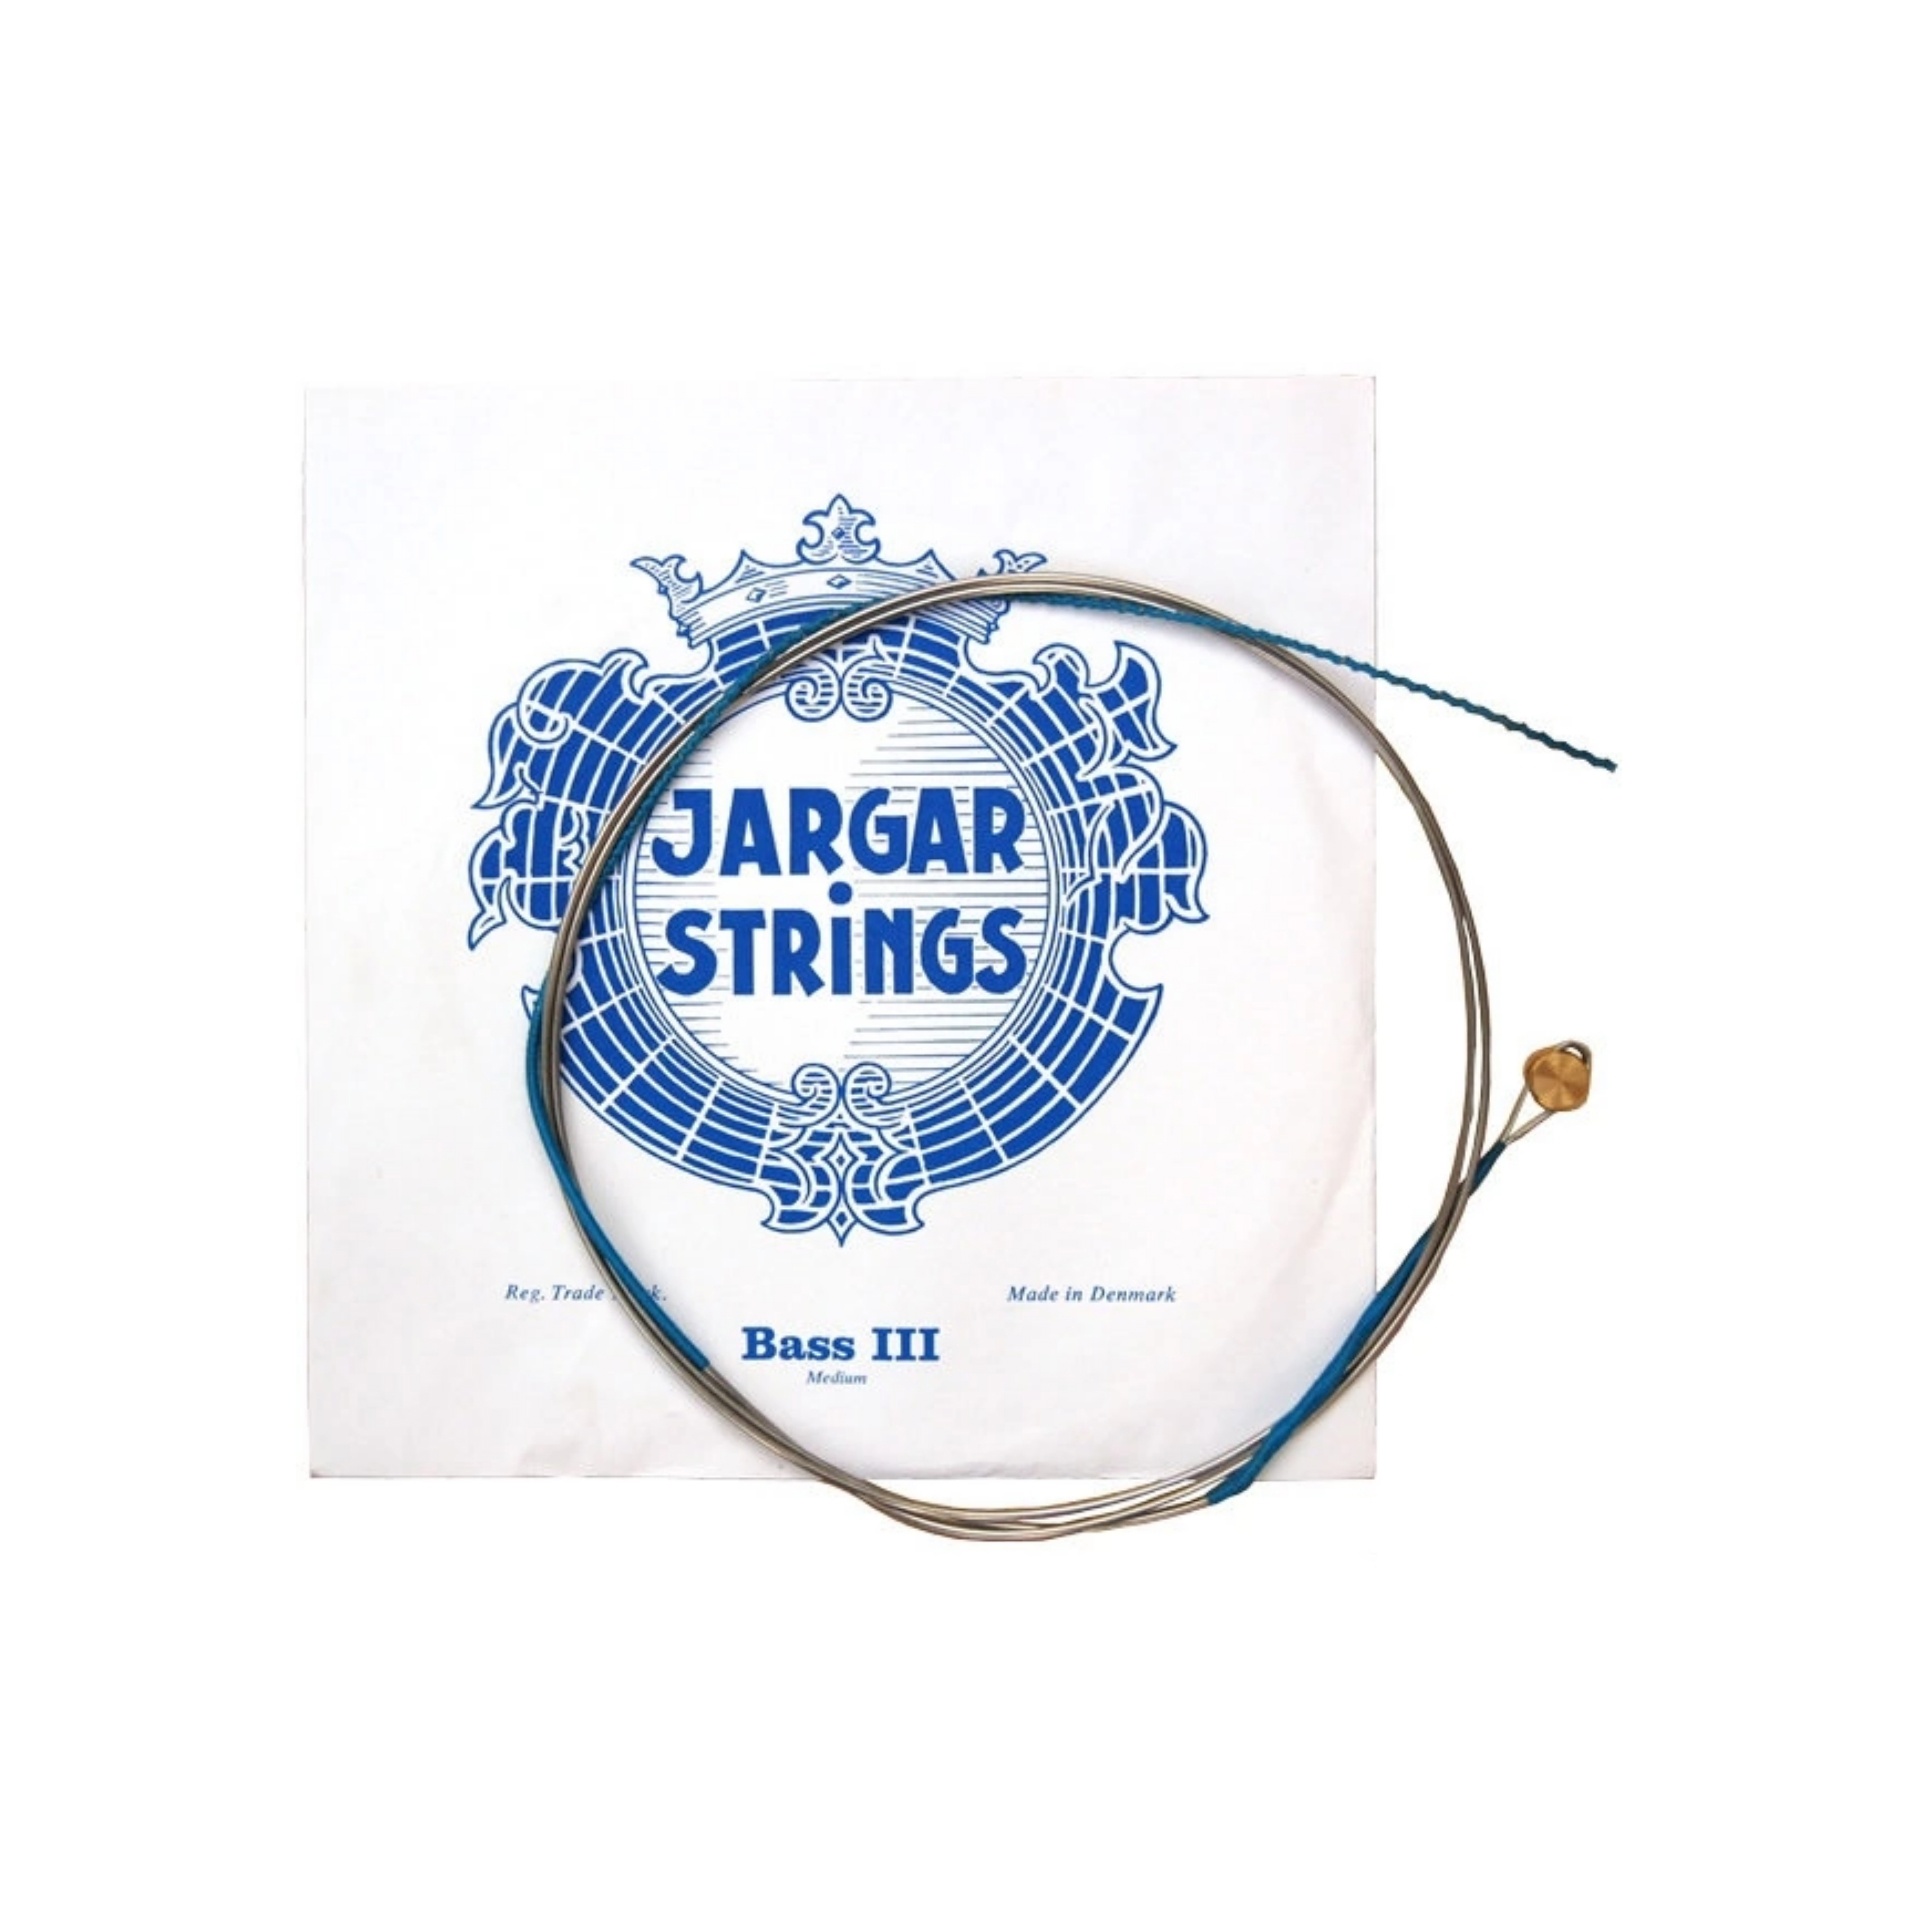 Jargar Medium 5 String струны для контрабаса, Дания